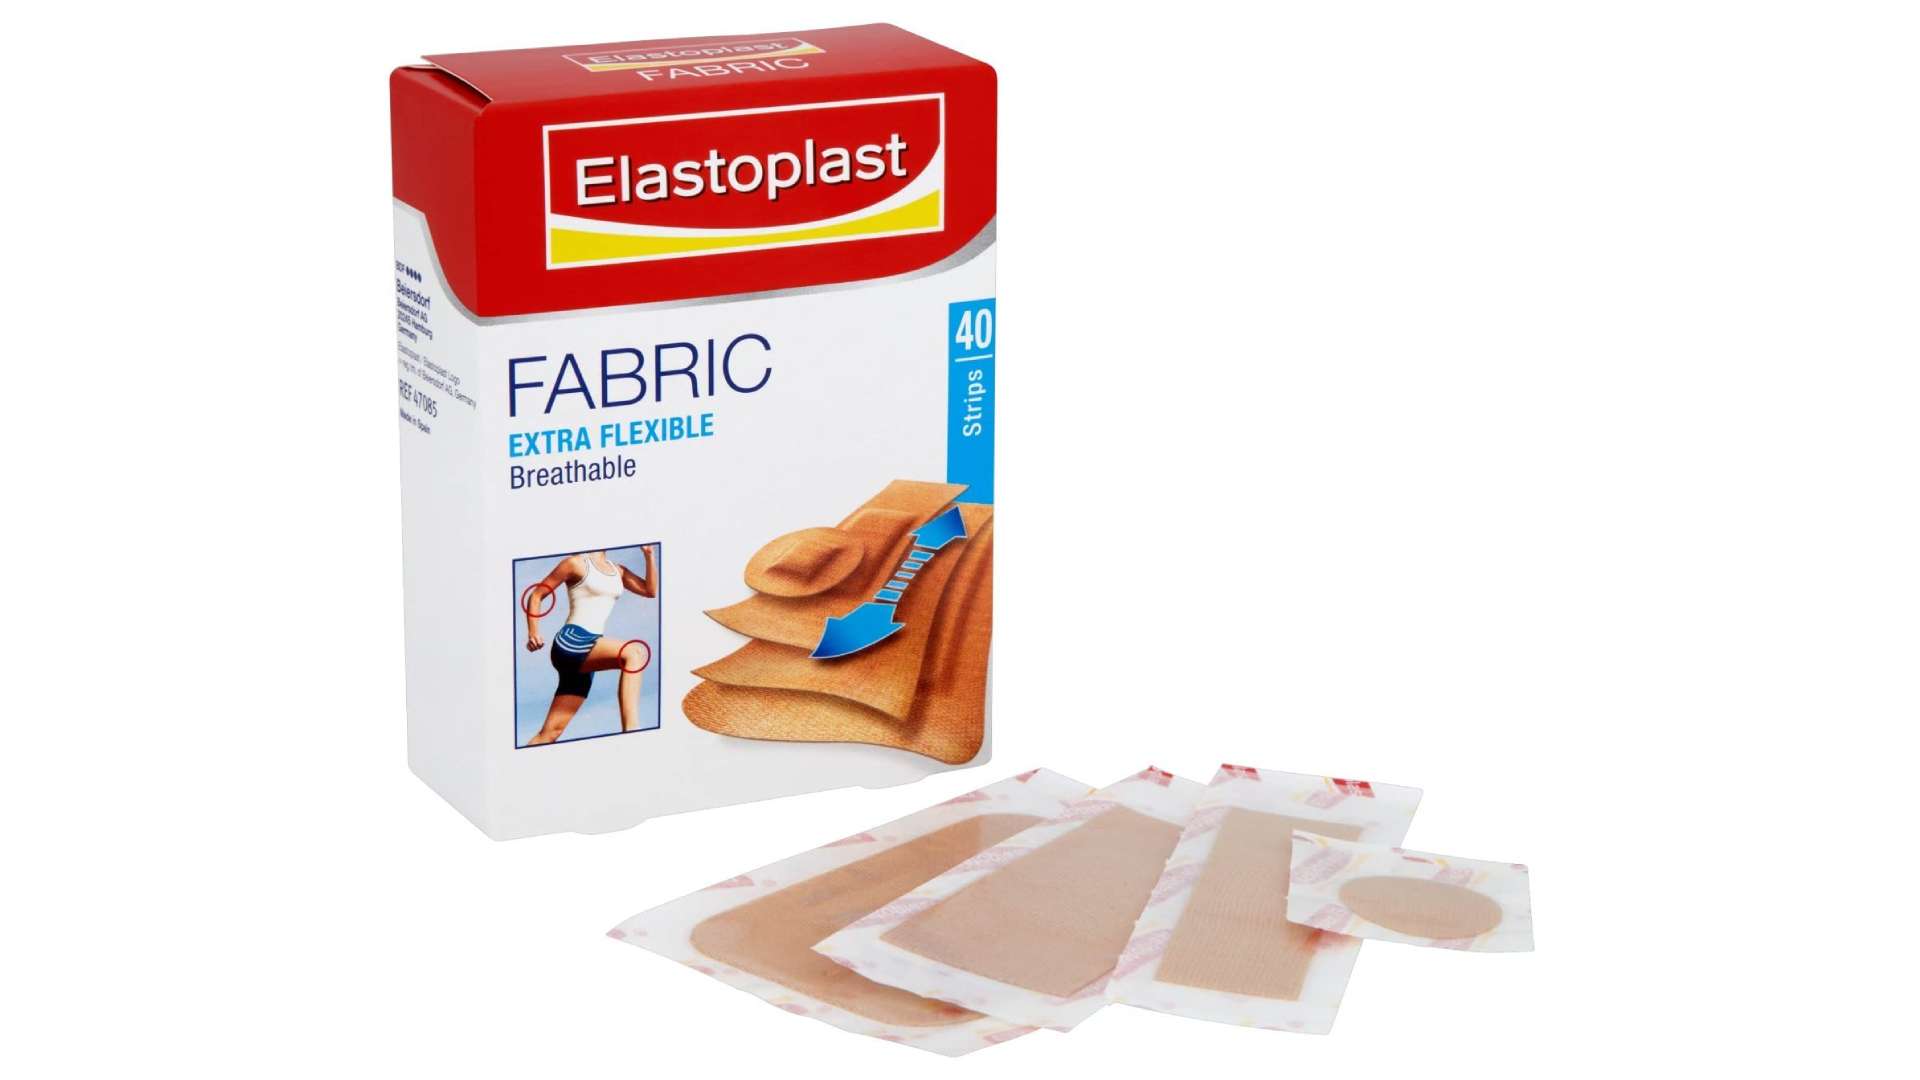 Elastoplast Fabric Extra Flexible Breathable Plasters